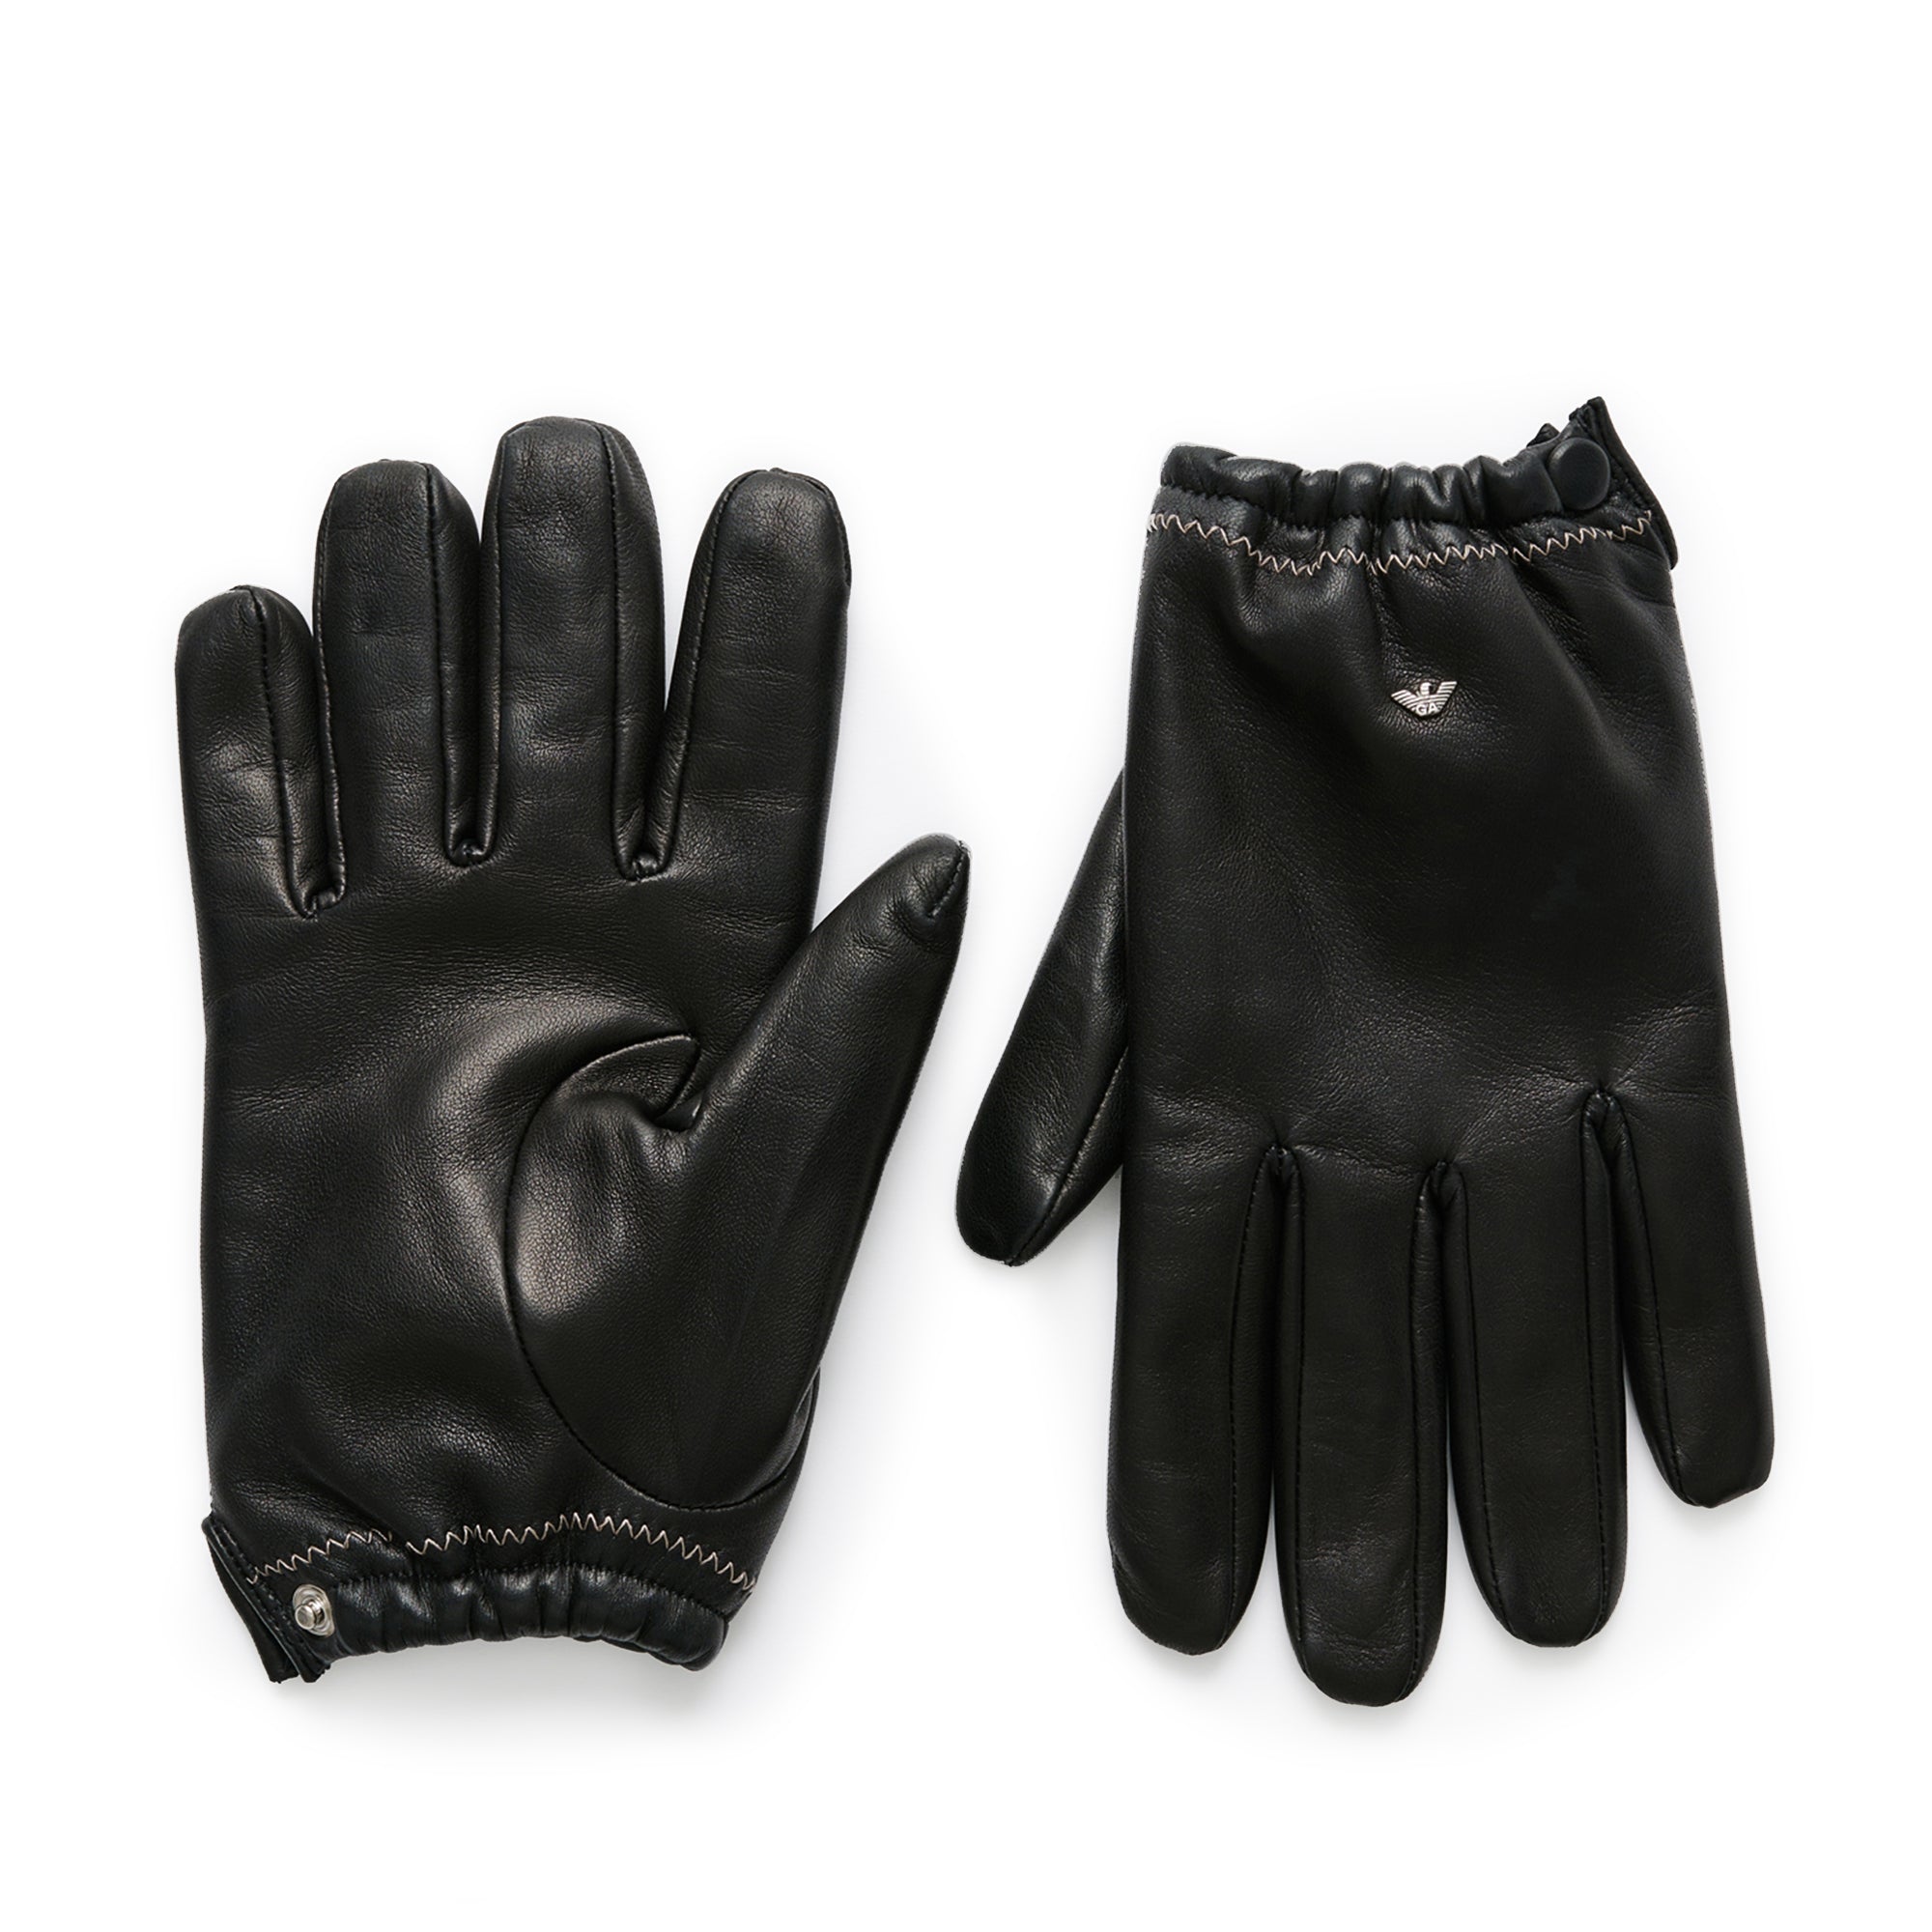 Our Legacy Work Shop - Armani Moto Gloves - (Liquirizia Leather) view 1